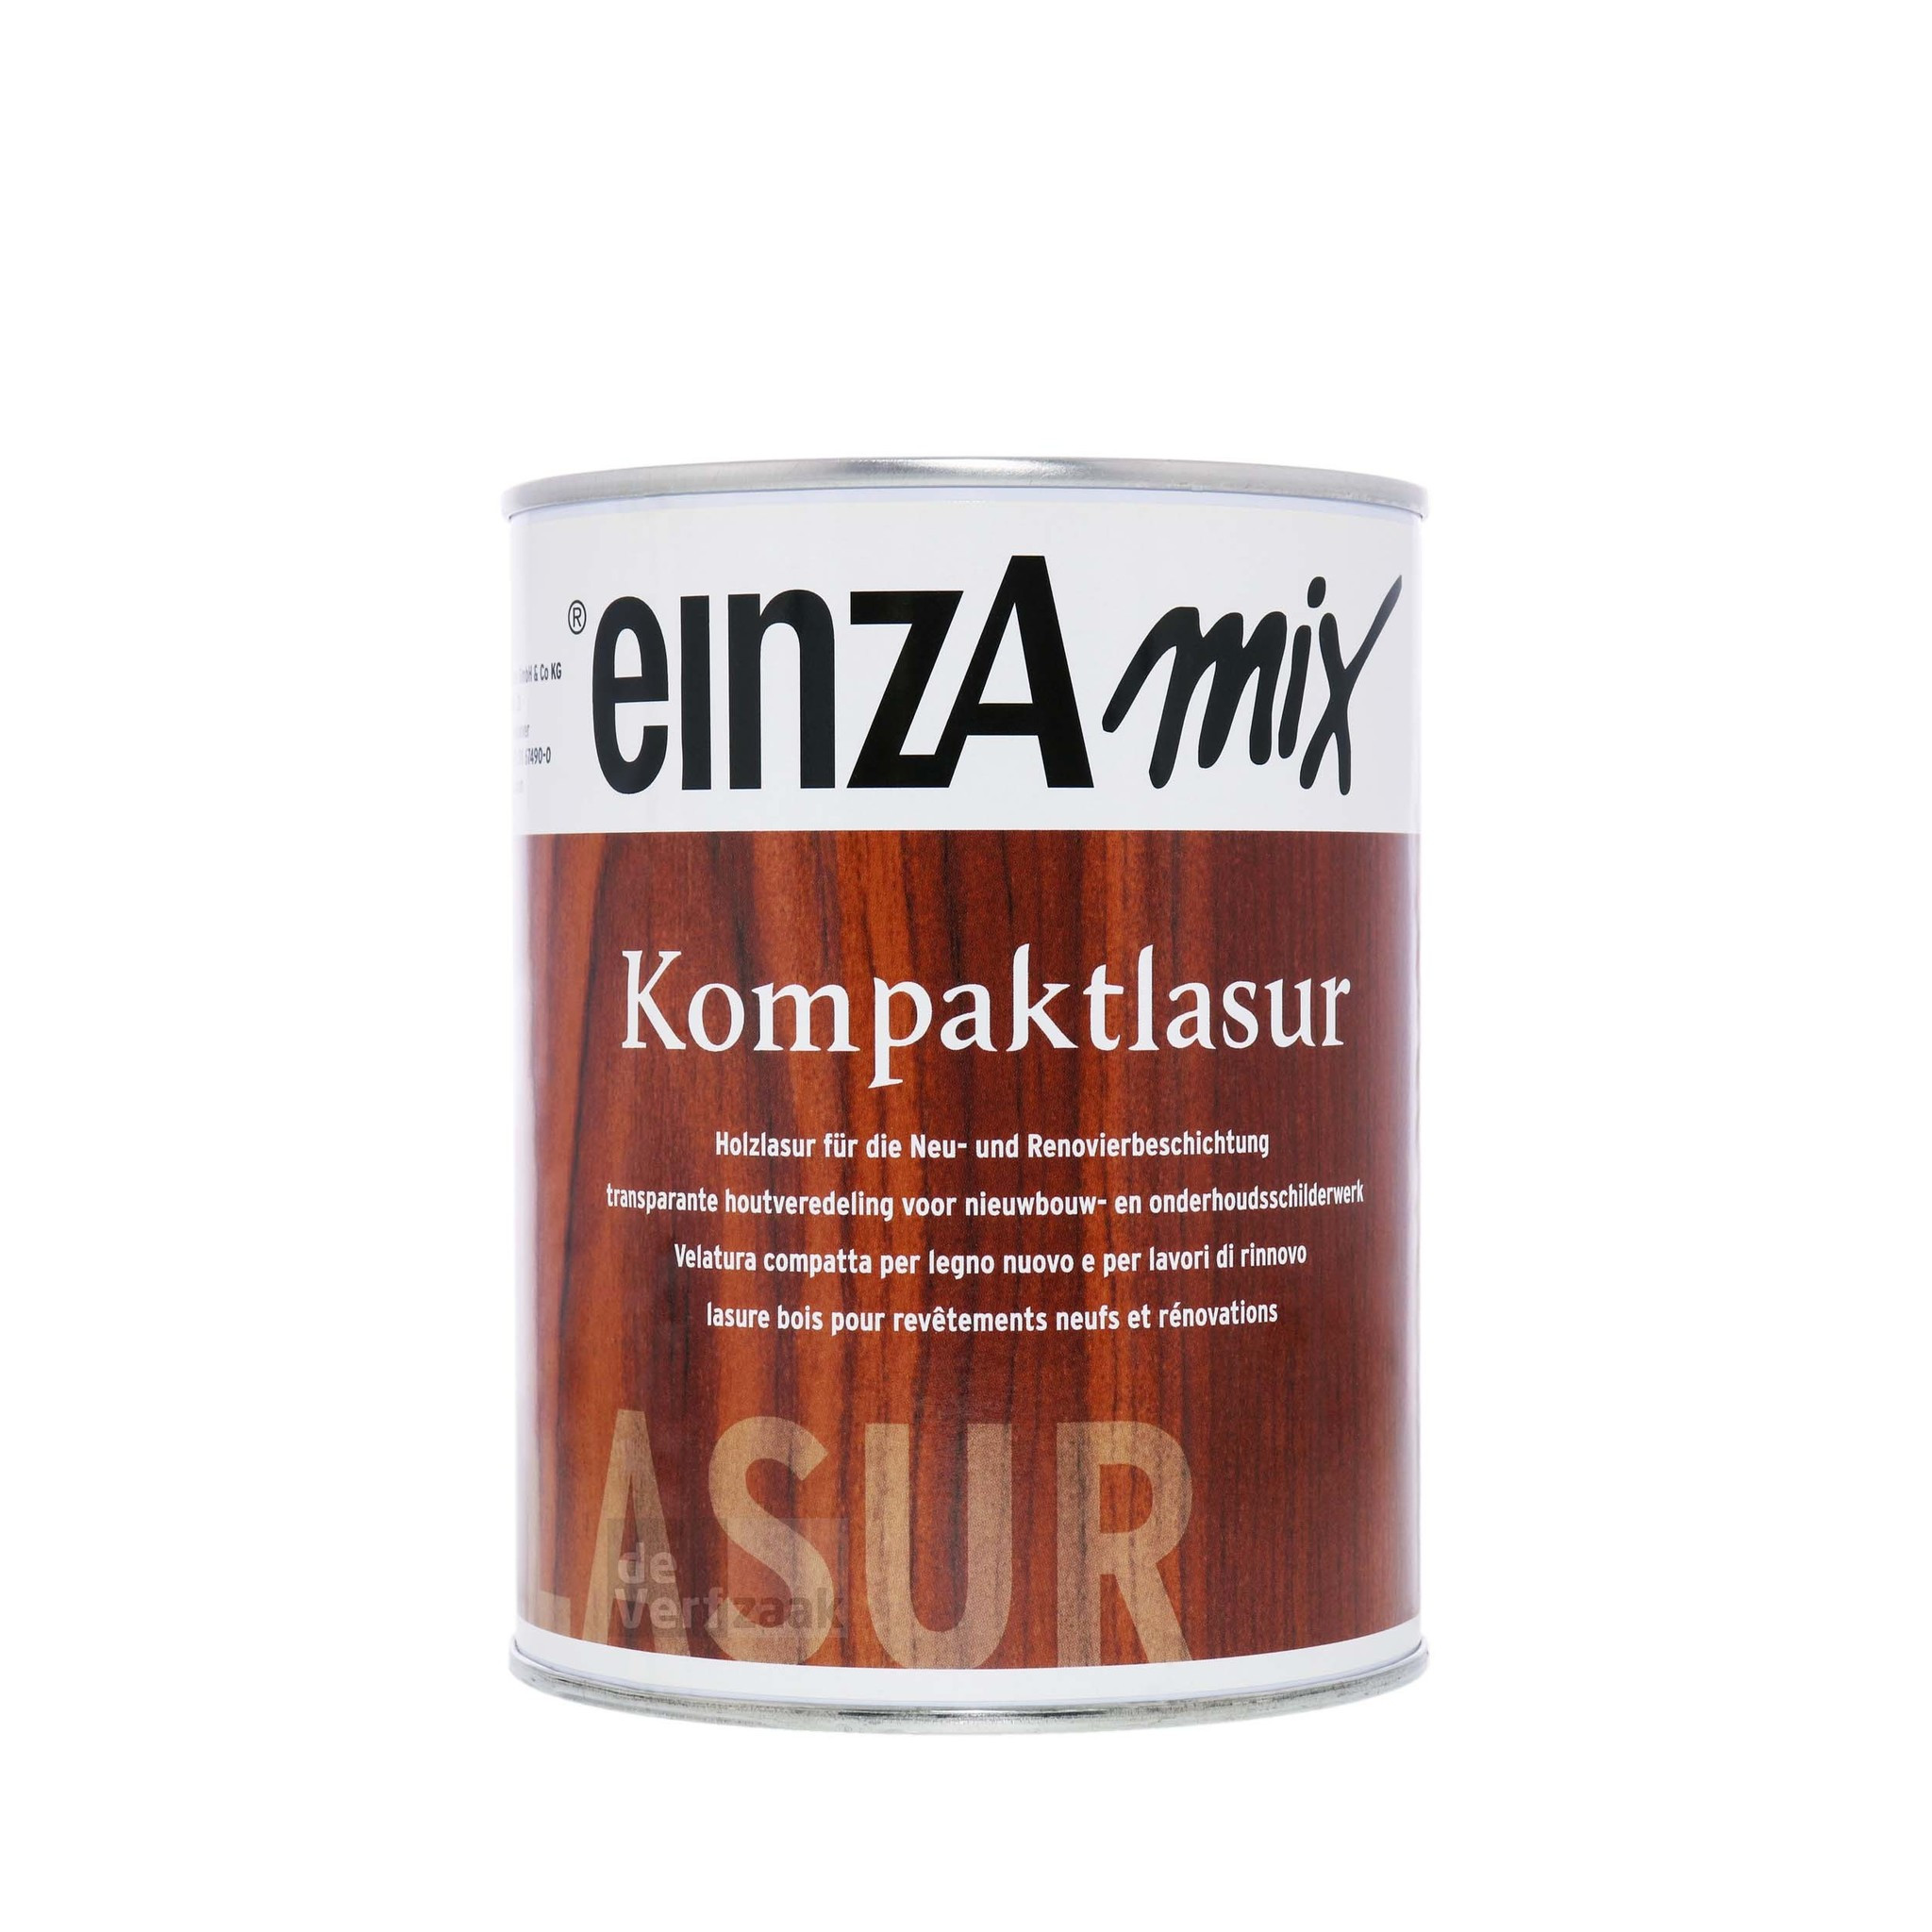 EinzA Kompaktlasur